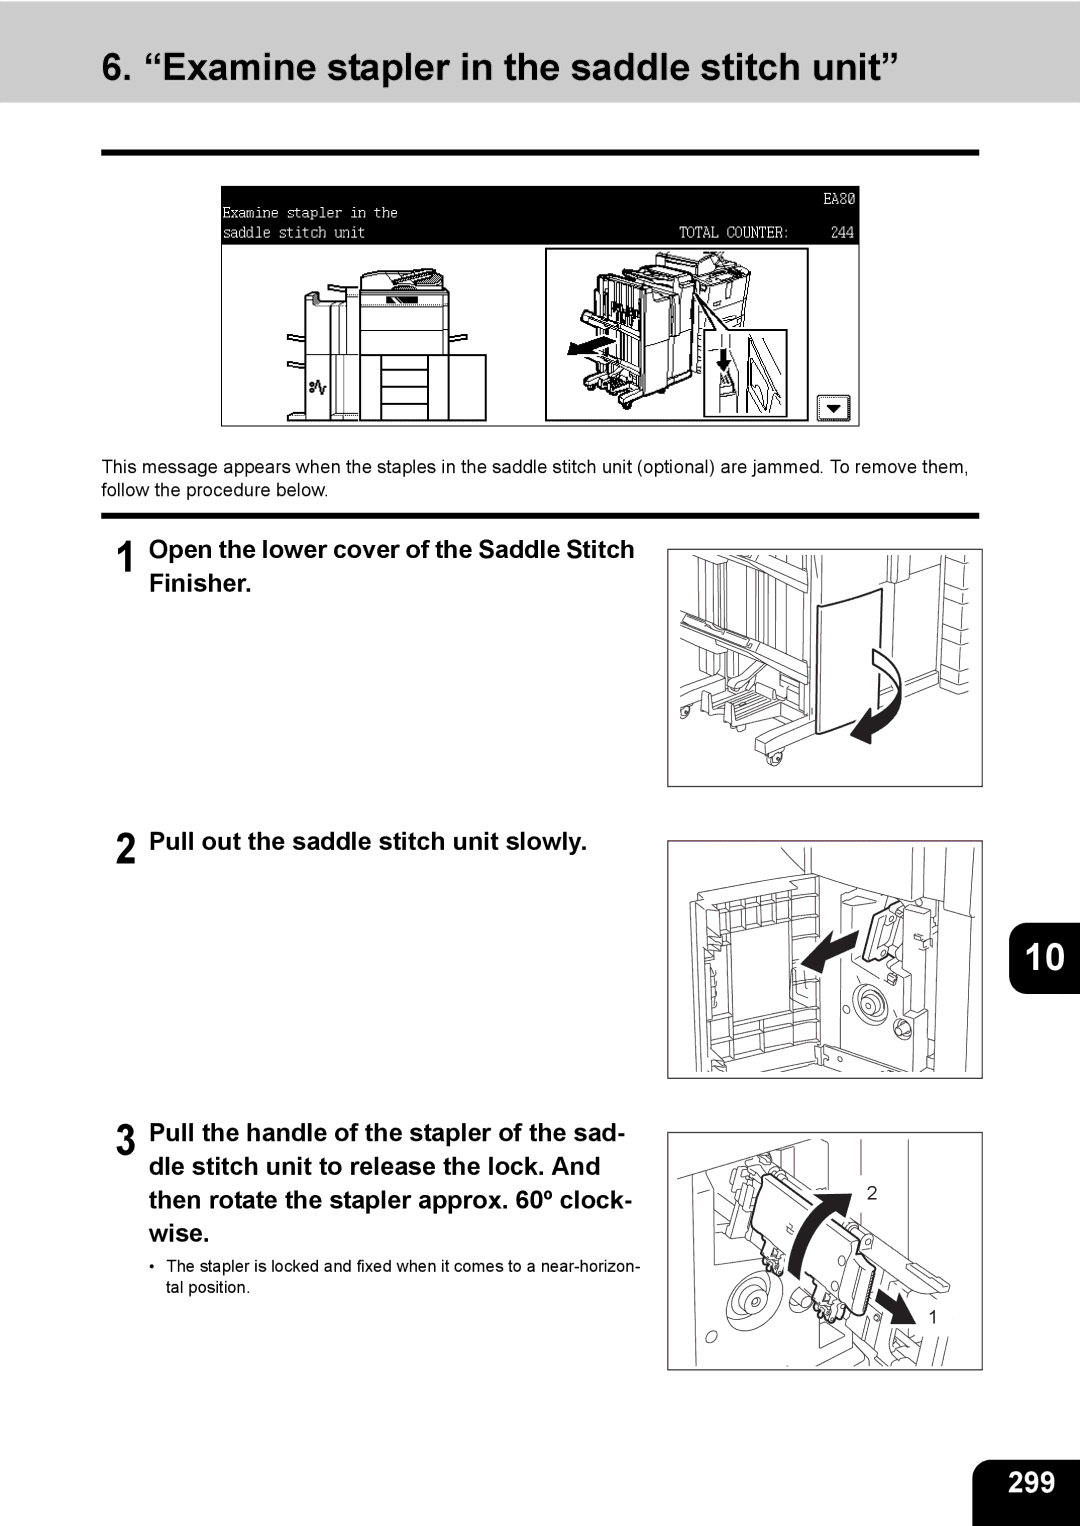 Toshiba 850, 720 manual Examine stapler in the saddle stitch unit, 299 